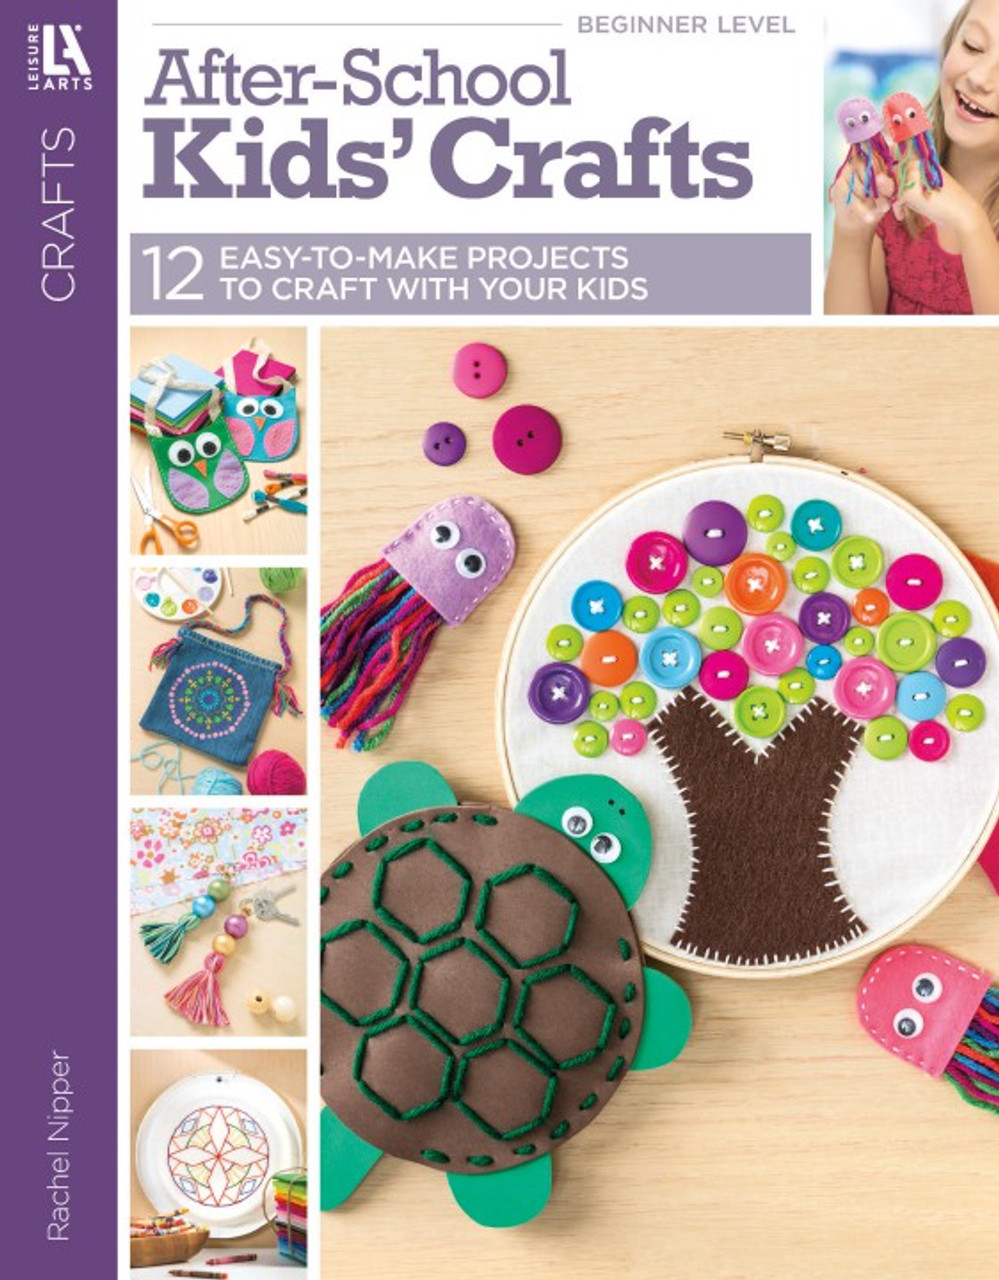 Leisure Arts After-School Kids' Crafts eBook